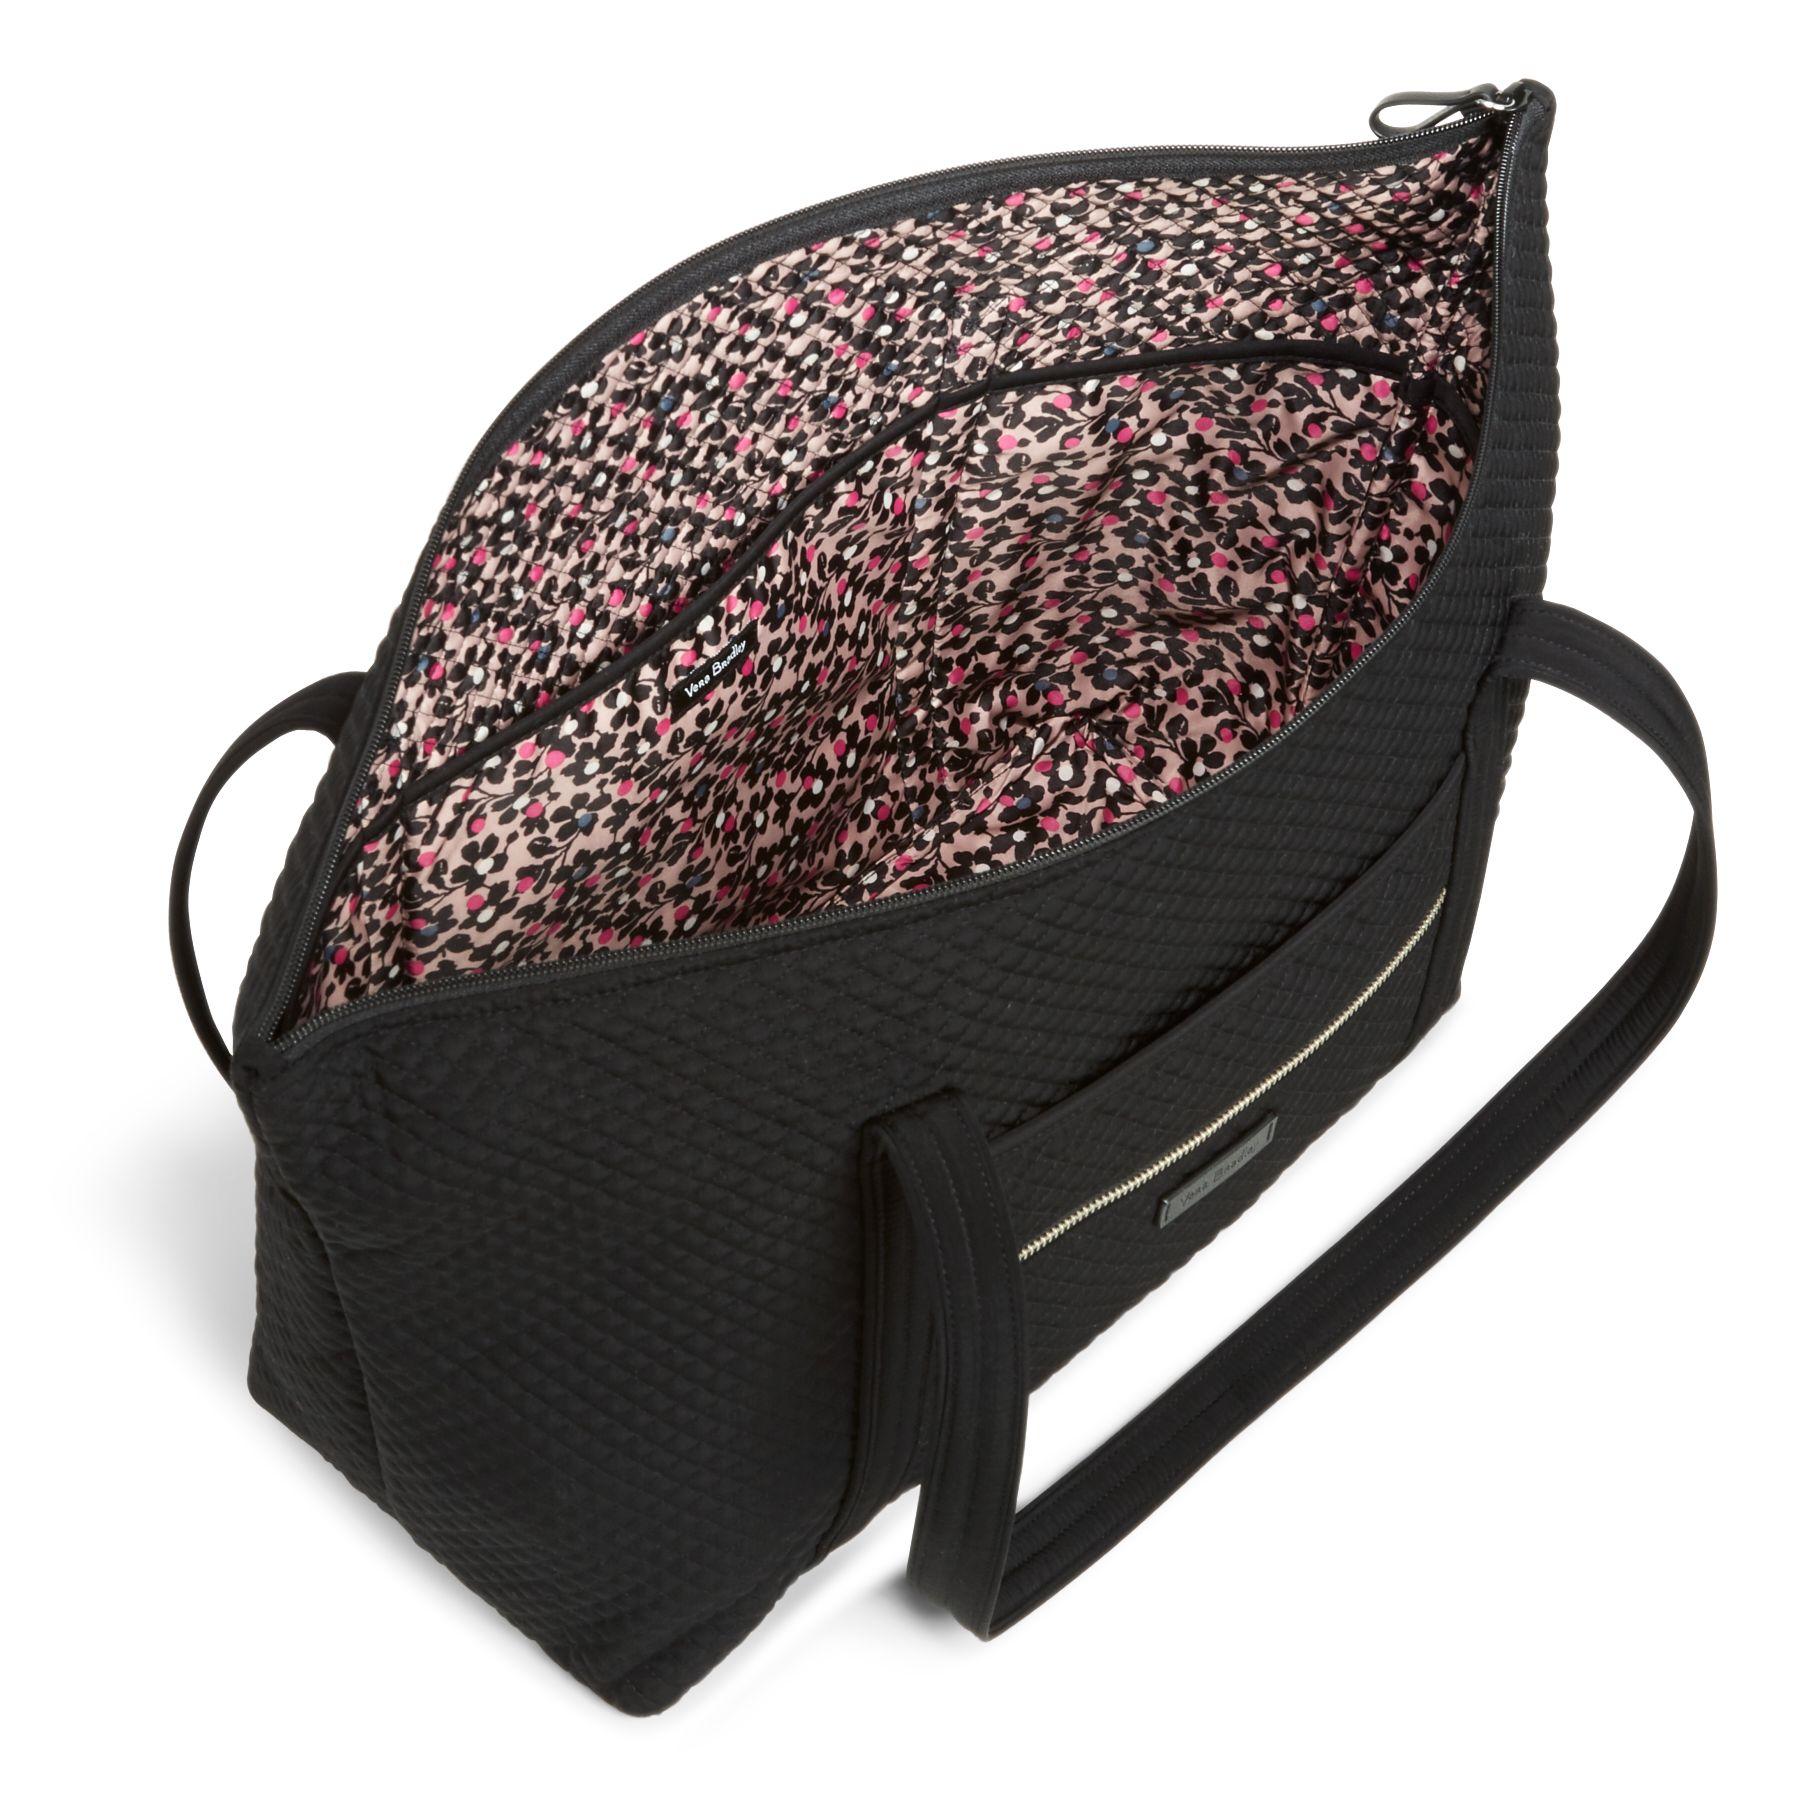 Vera Bradley Synthetic Miller Travel Bag in Black - Save 1% - Lyst